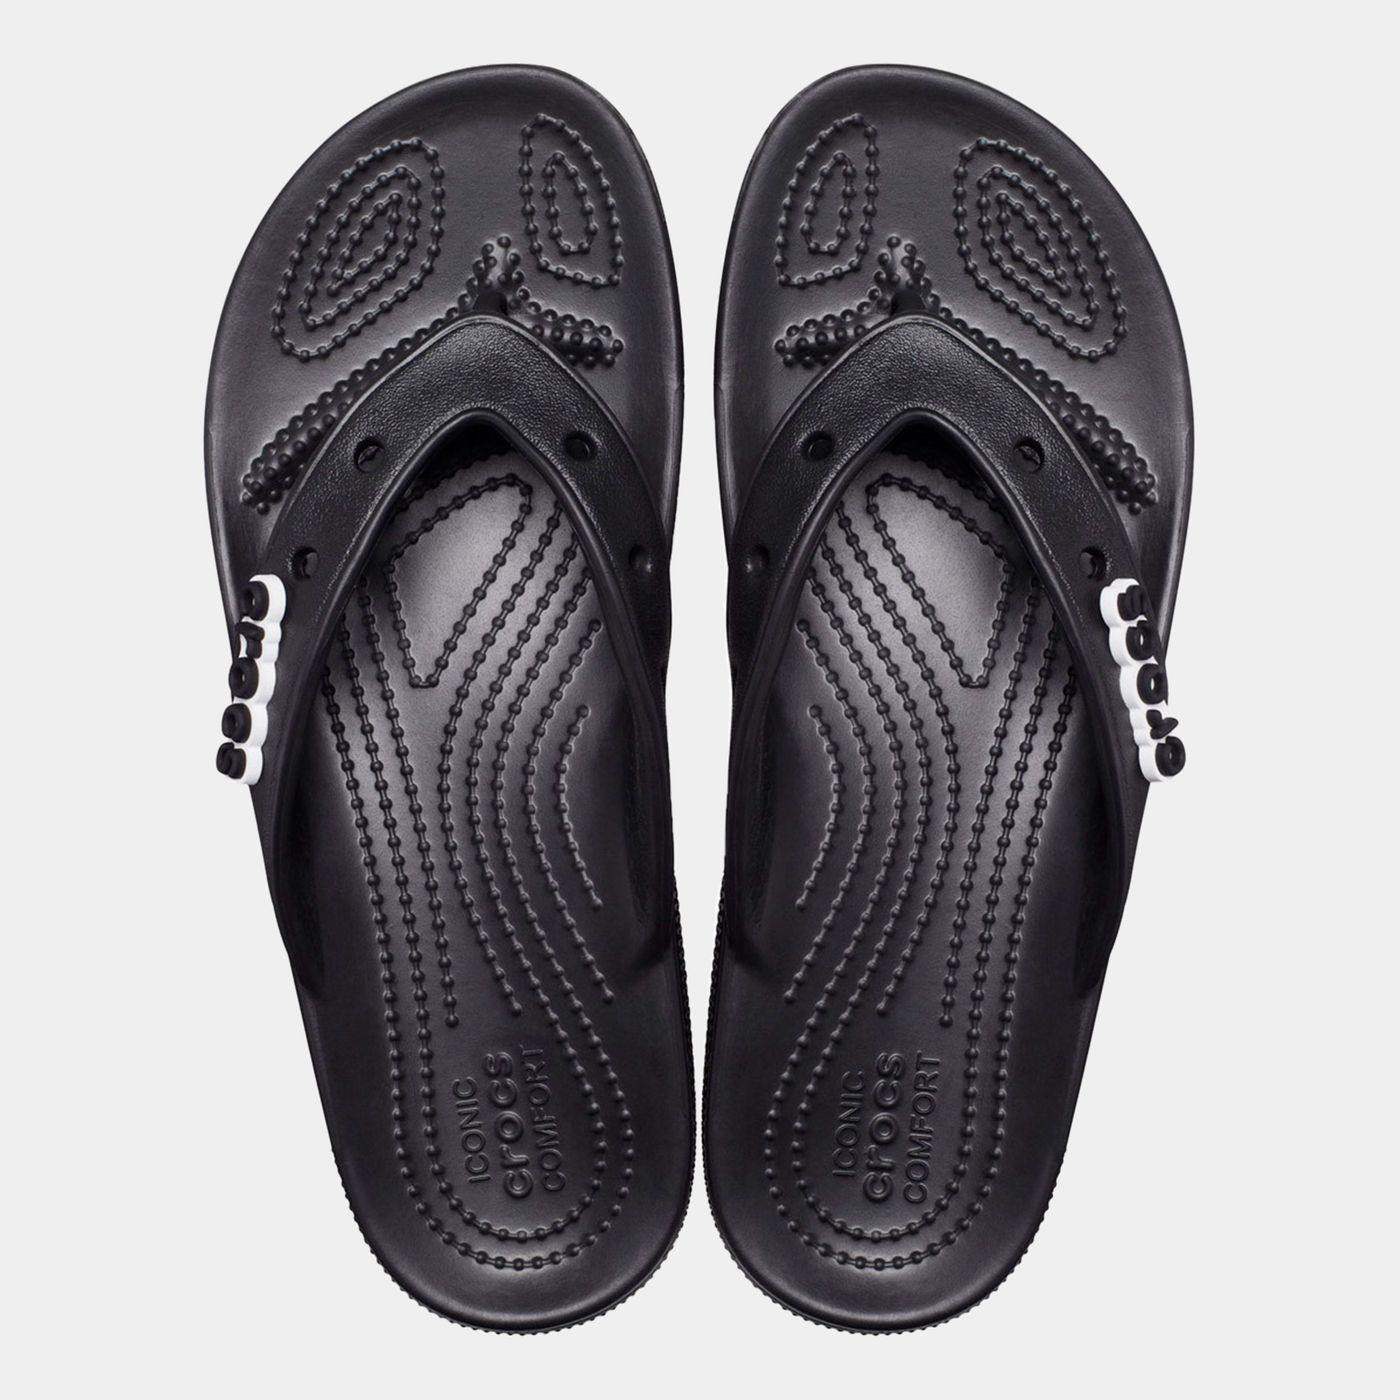 CR.207713 - Flip-flops - crocs